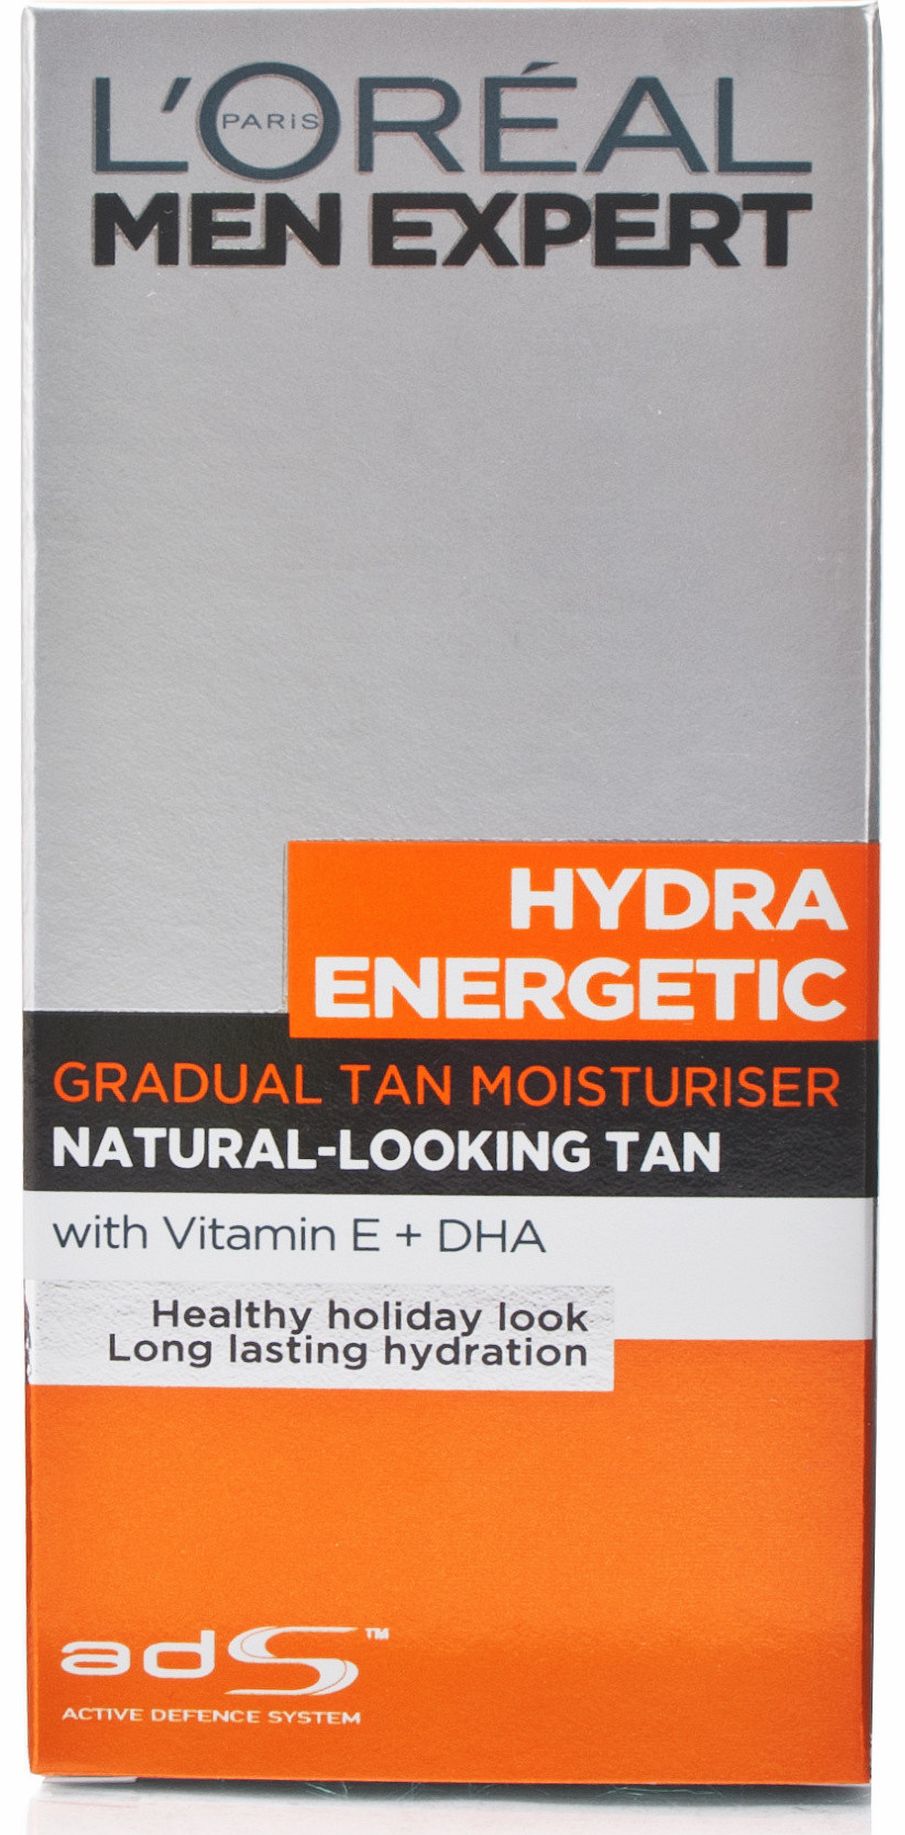 L'Oreal Men Expert Hydra Energetic Tanning